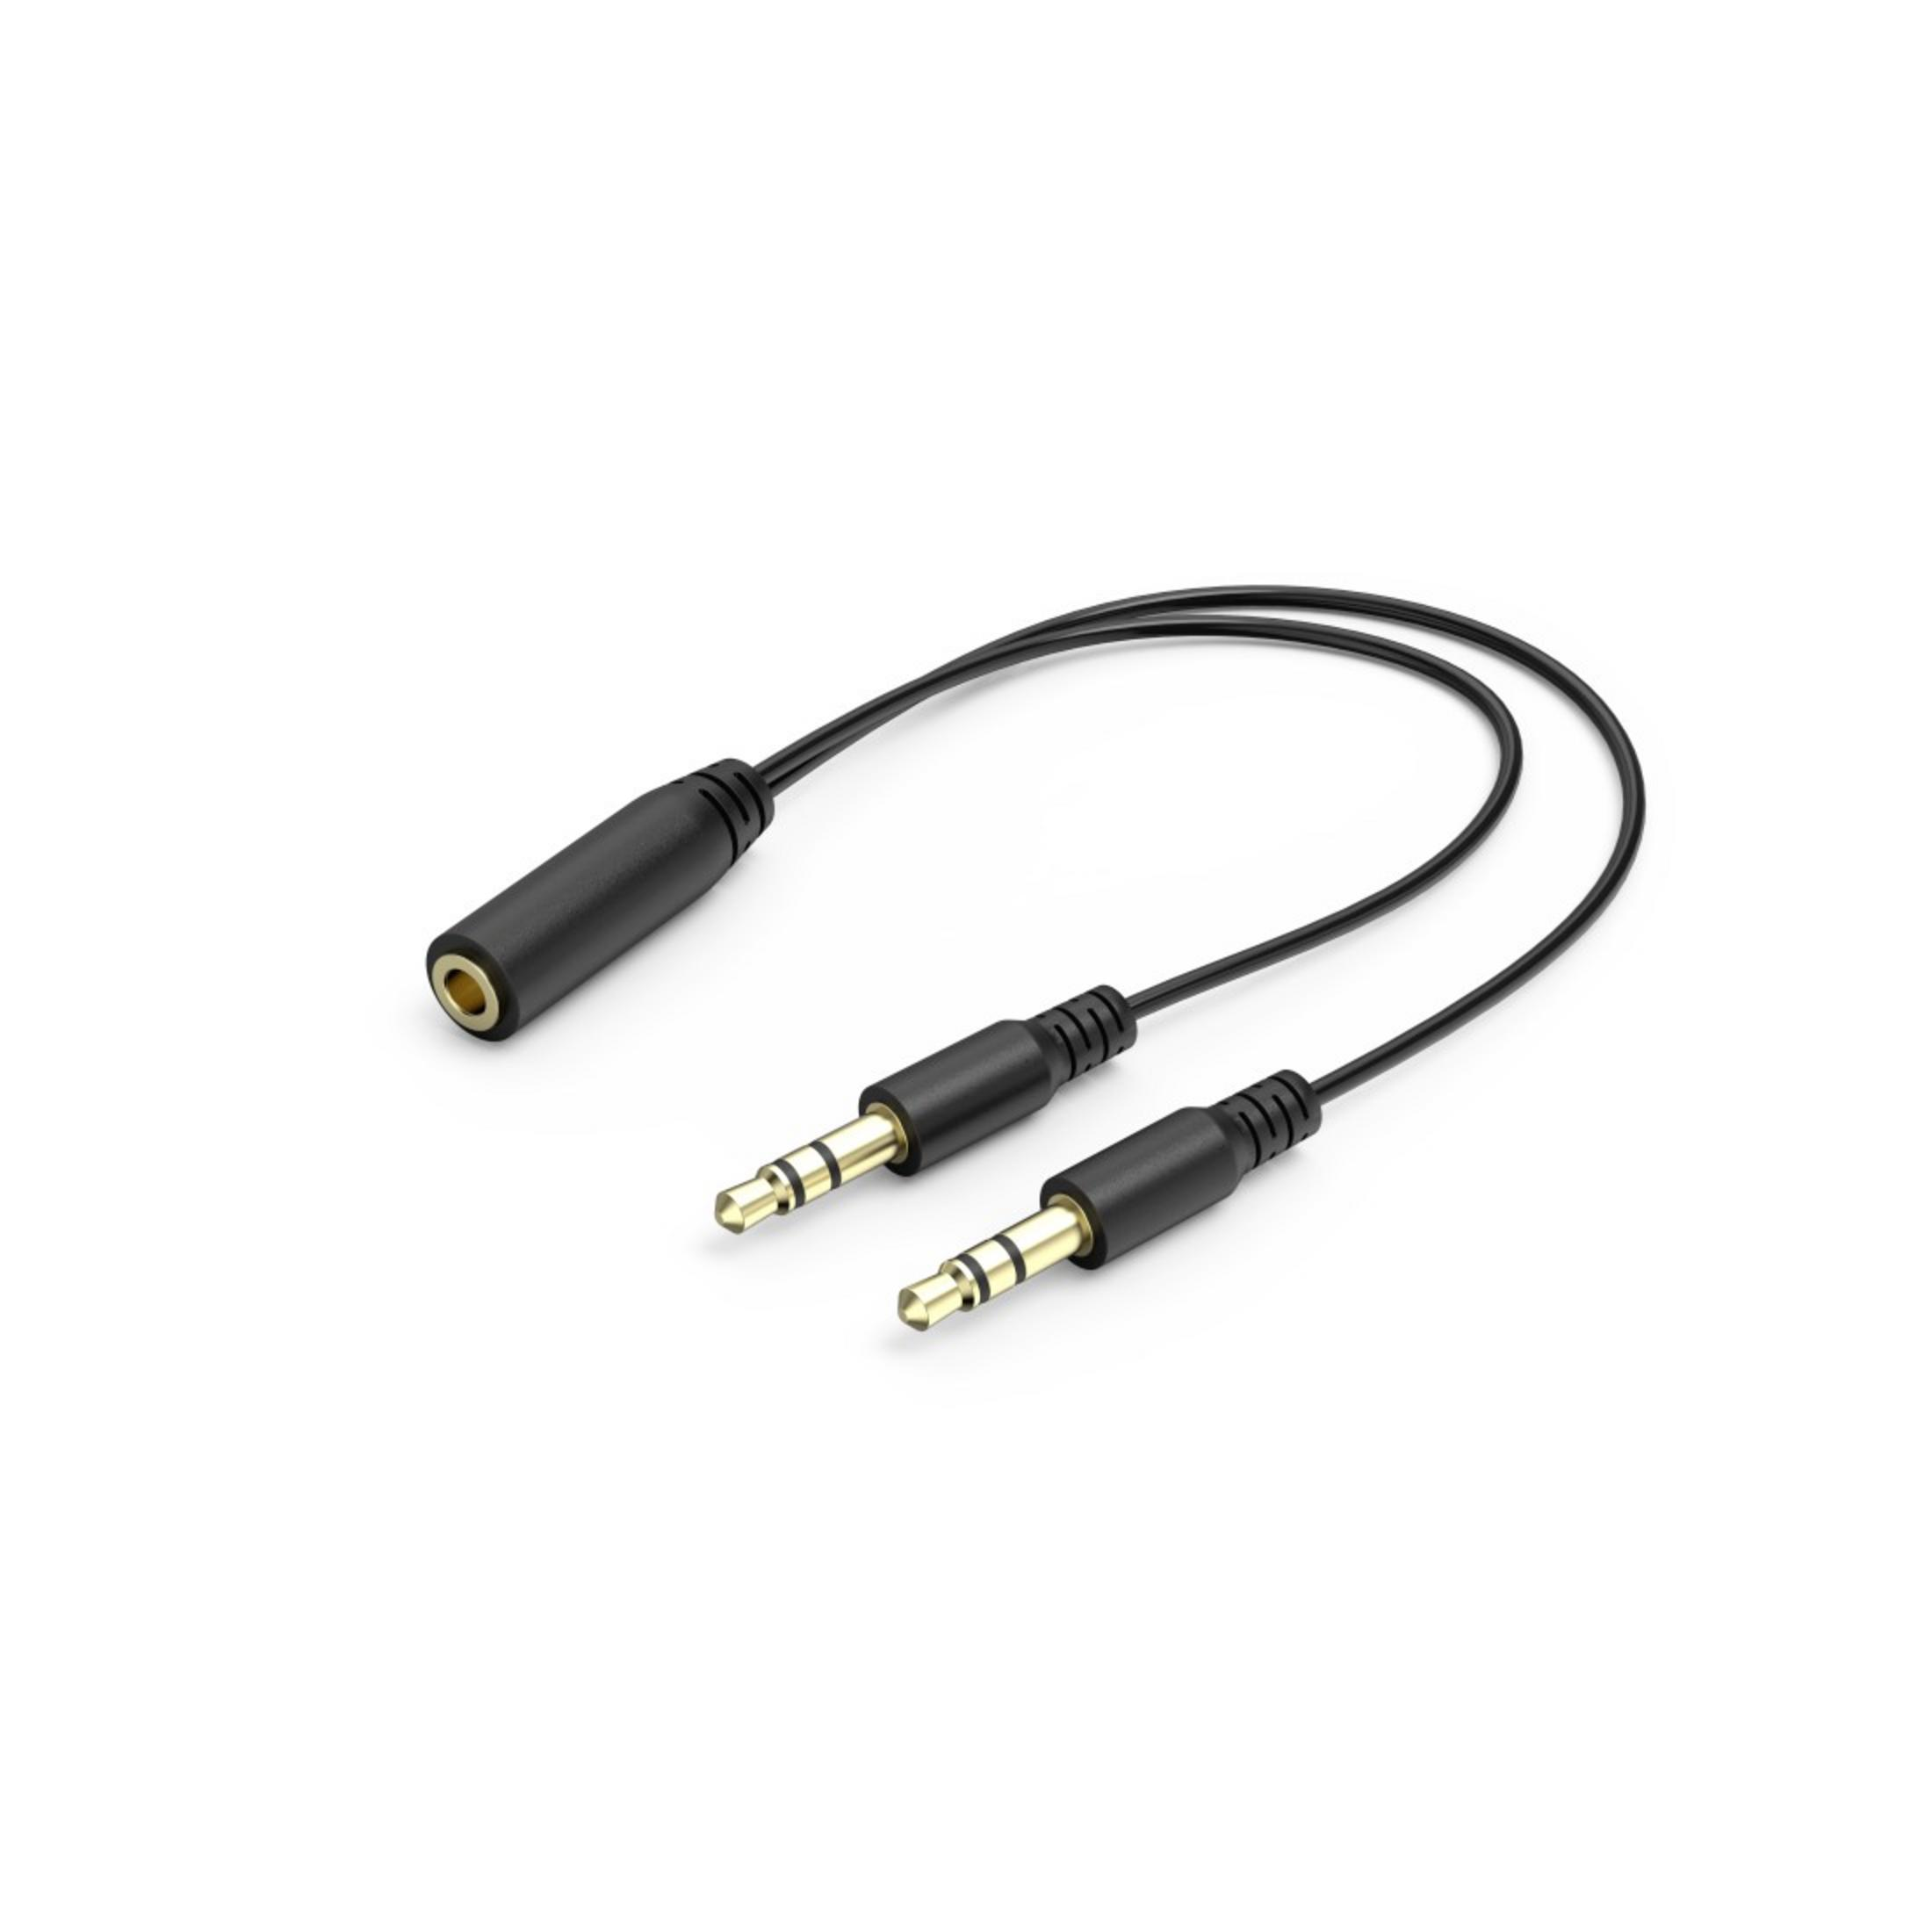 300, URAGE SoundZ Headset Over-ear Schwarz